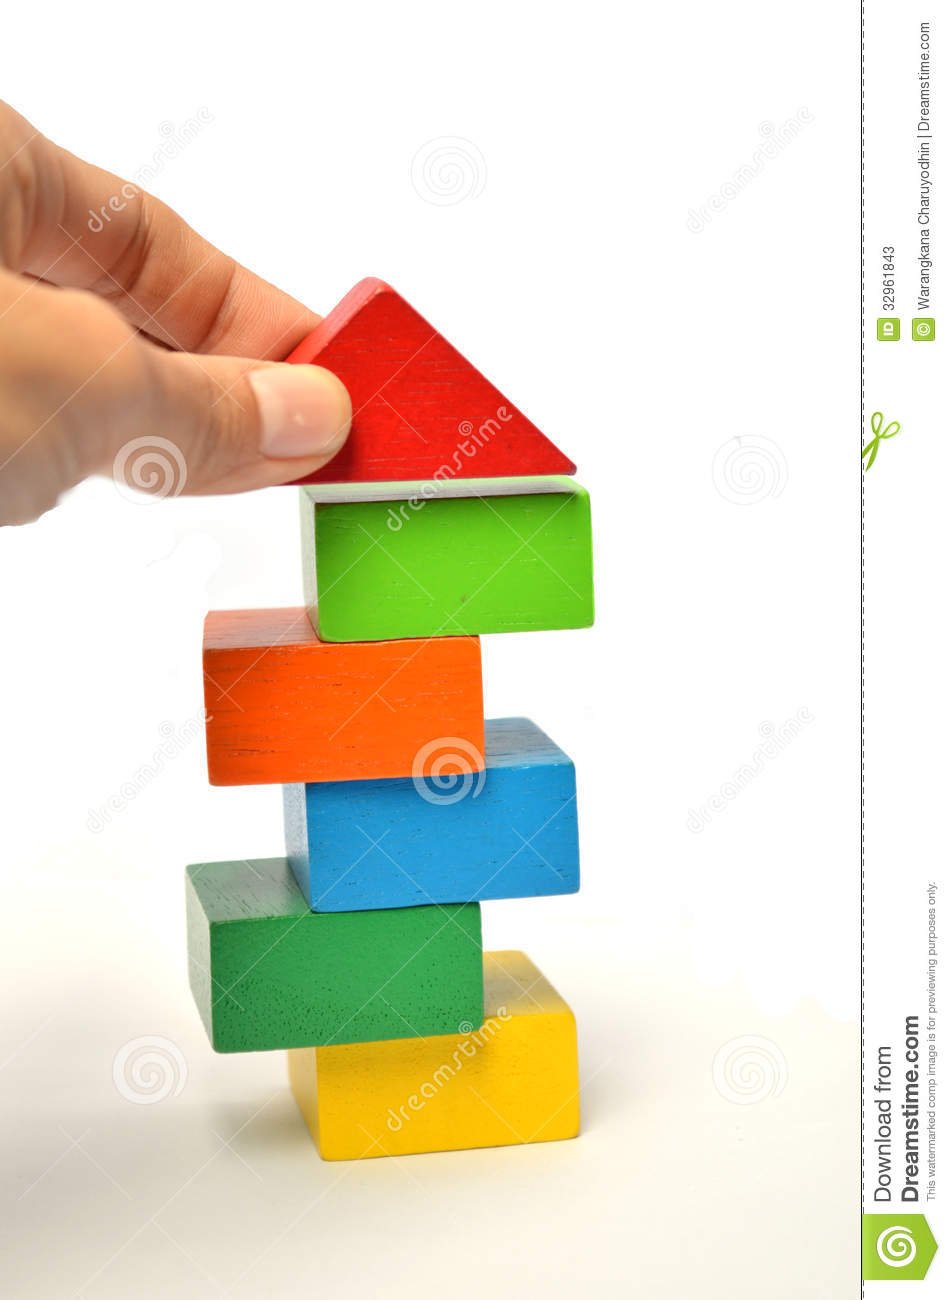 Building Colors Block Tower Stock Photos   Image  32961843